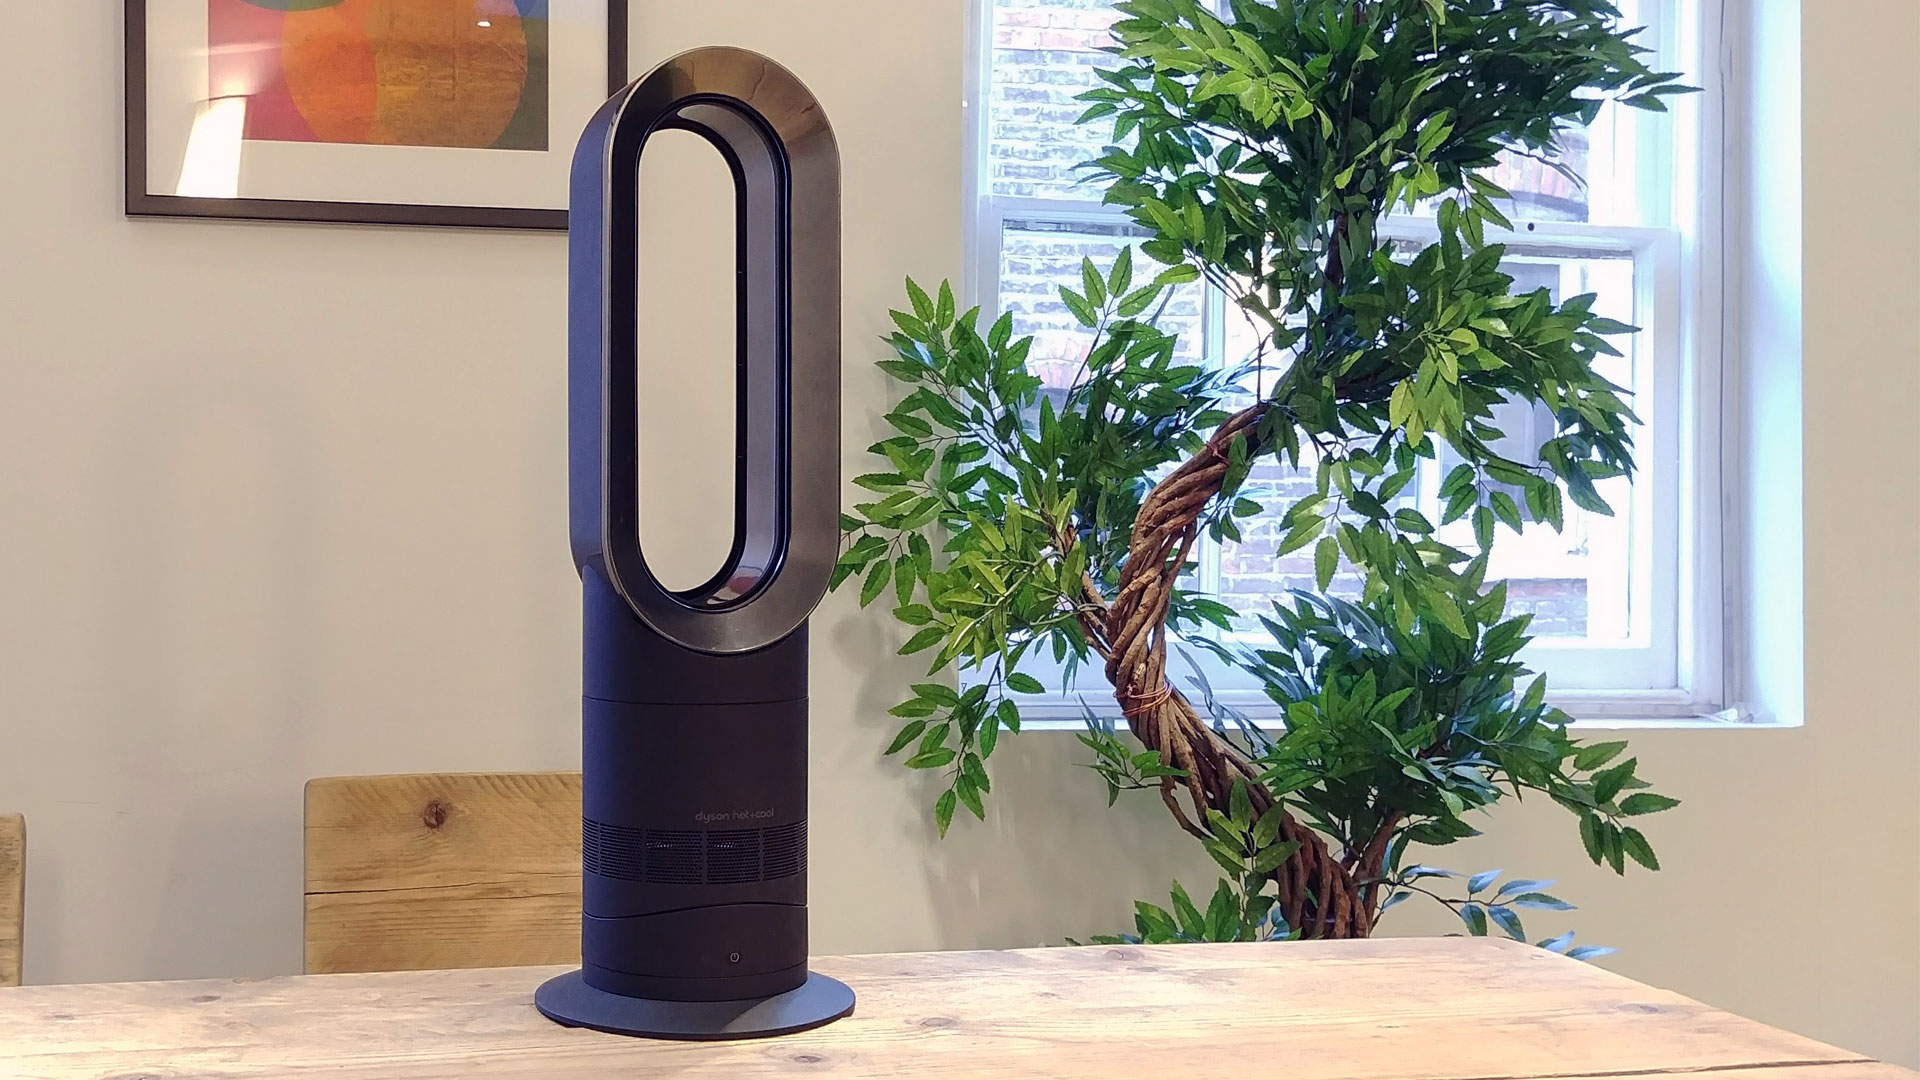 Lamme instans Pebish Dyson AM09 Hot + Cool fan heater review | TechRadar